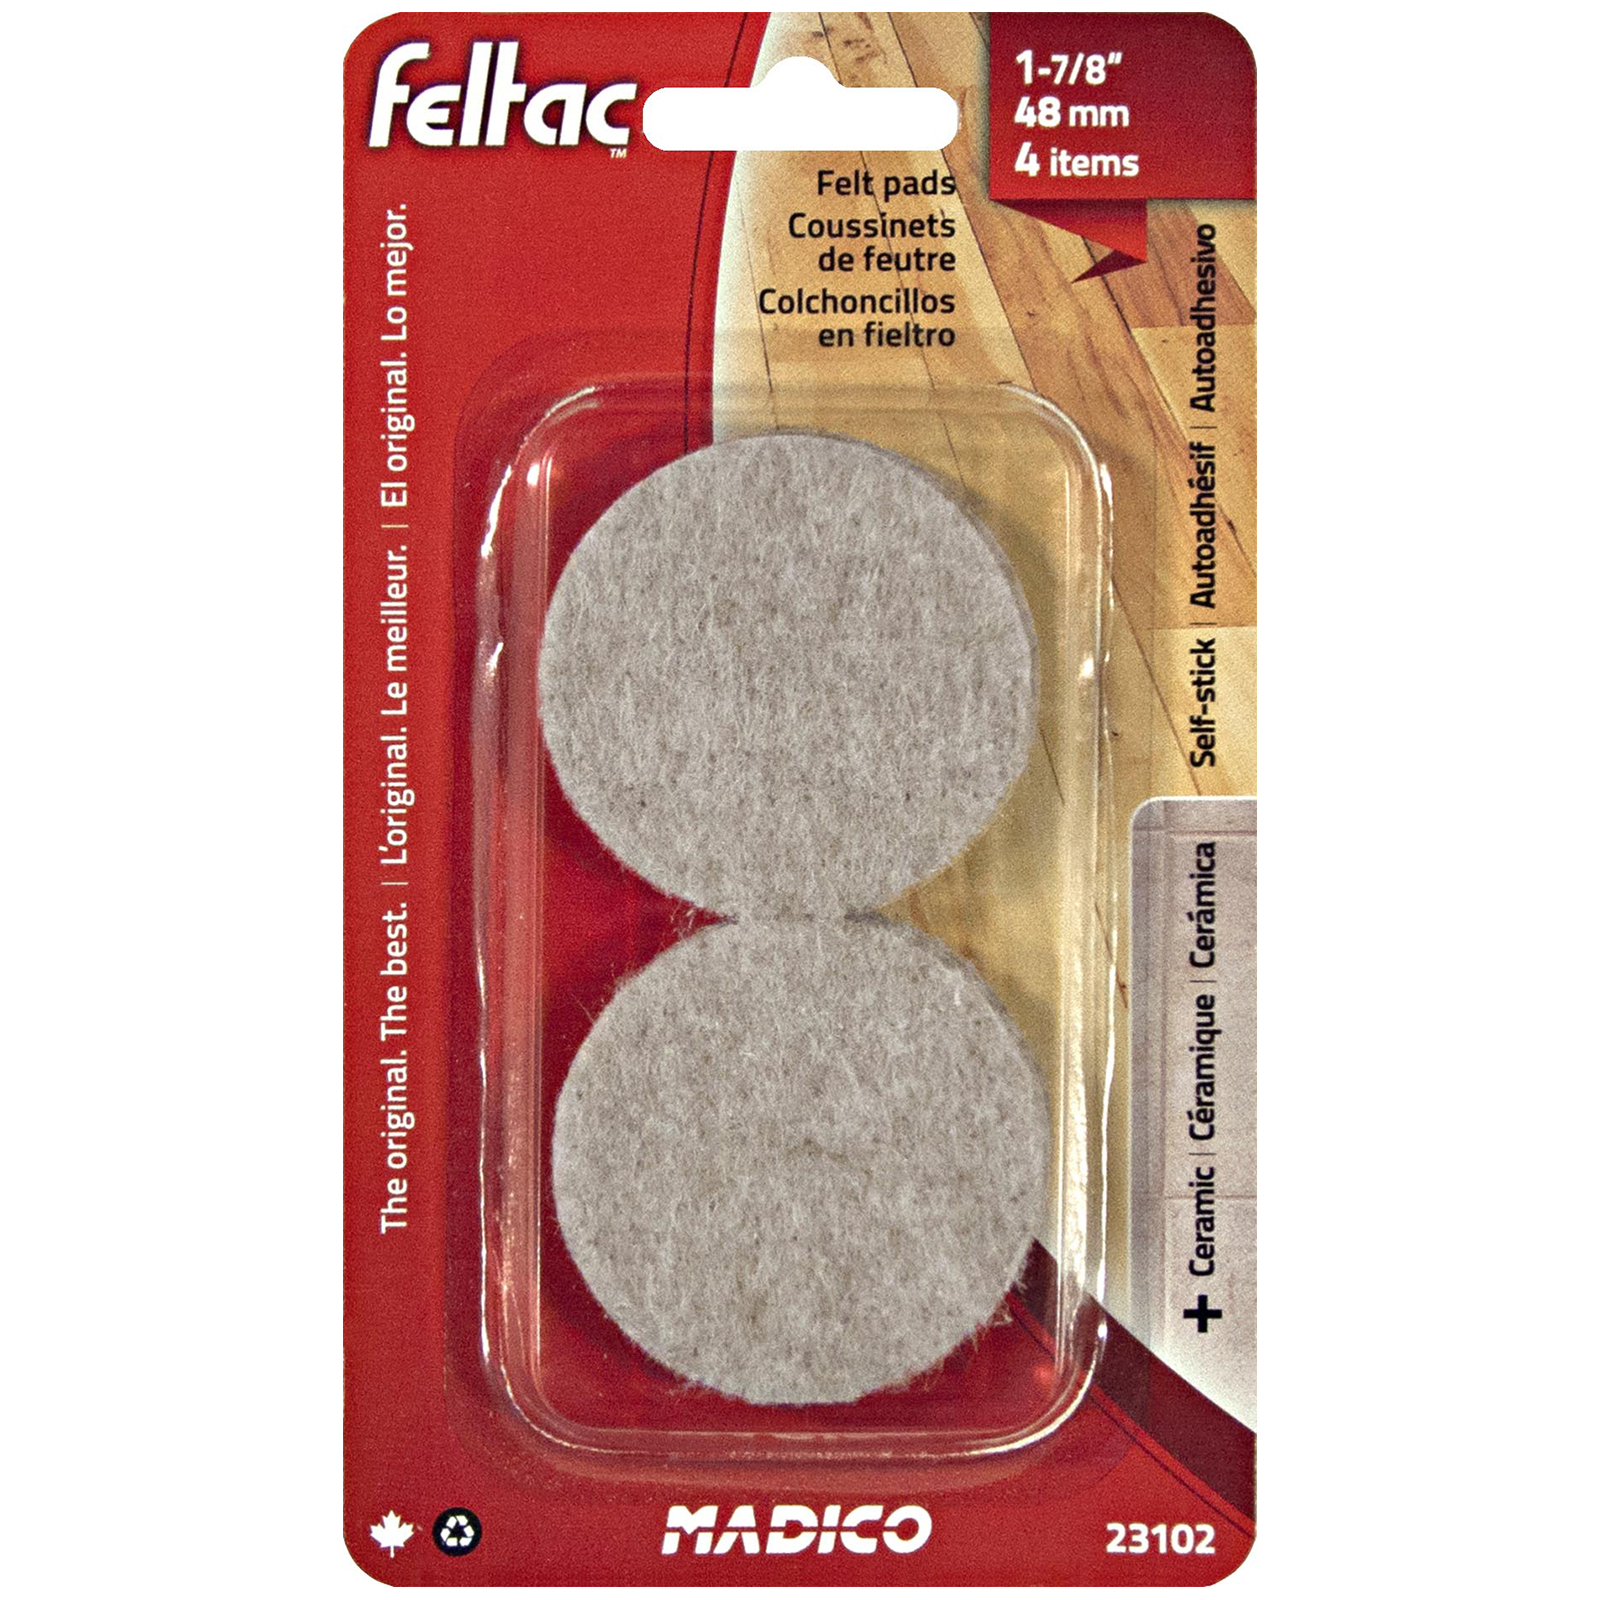 Madico 48mm Beige Round Feltac Floor Protection Pad - 4 Pack